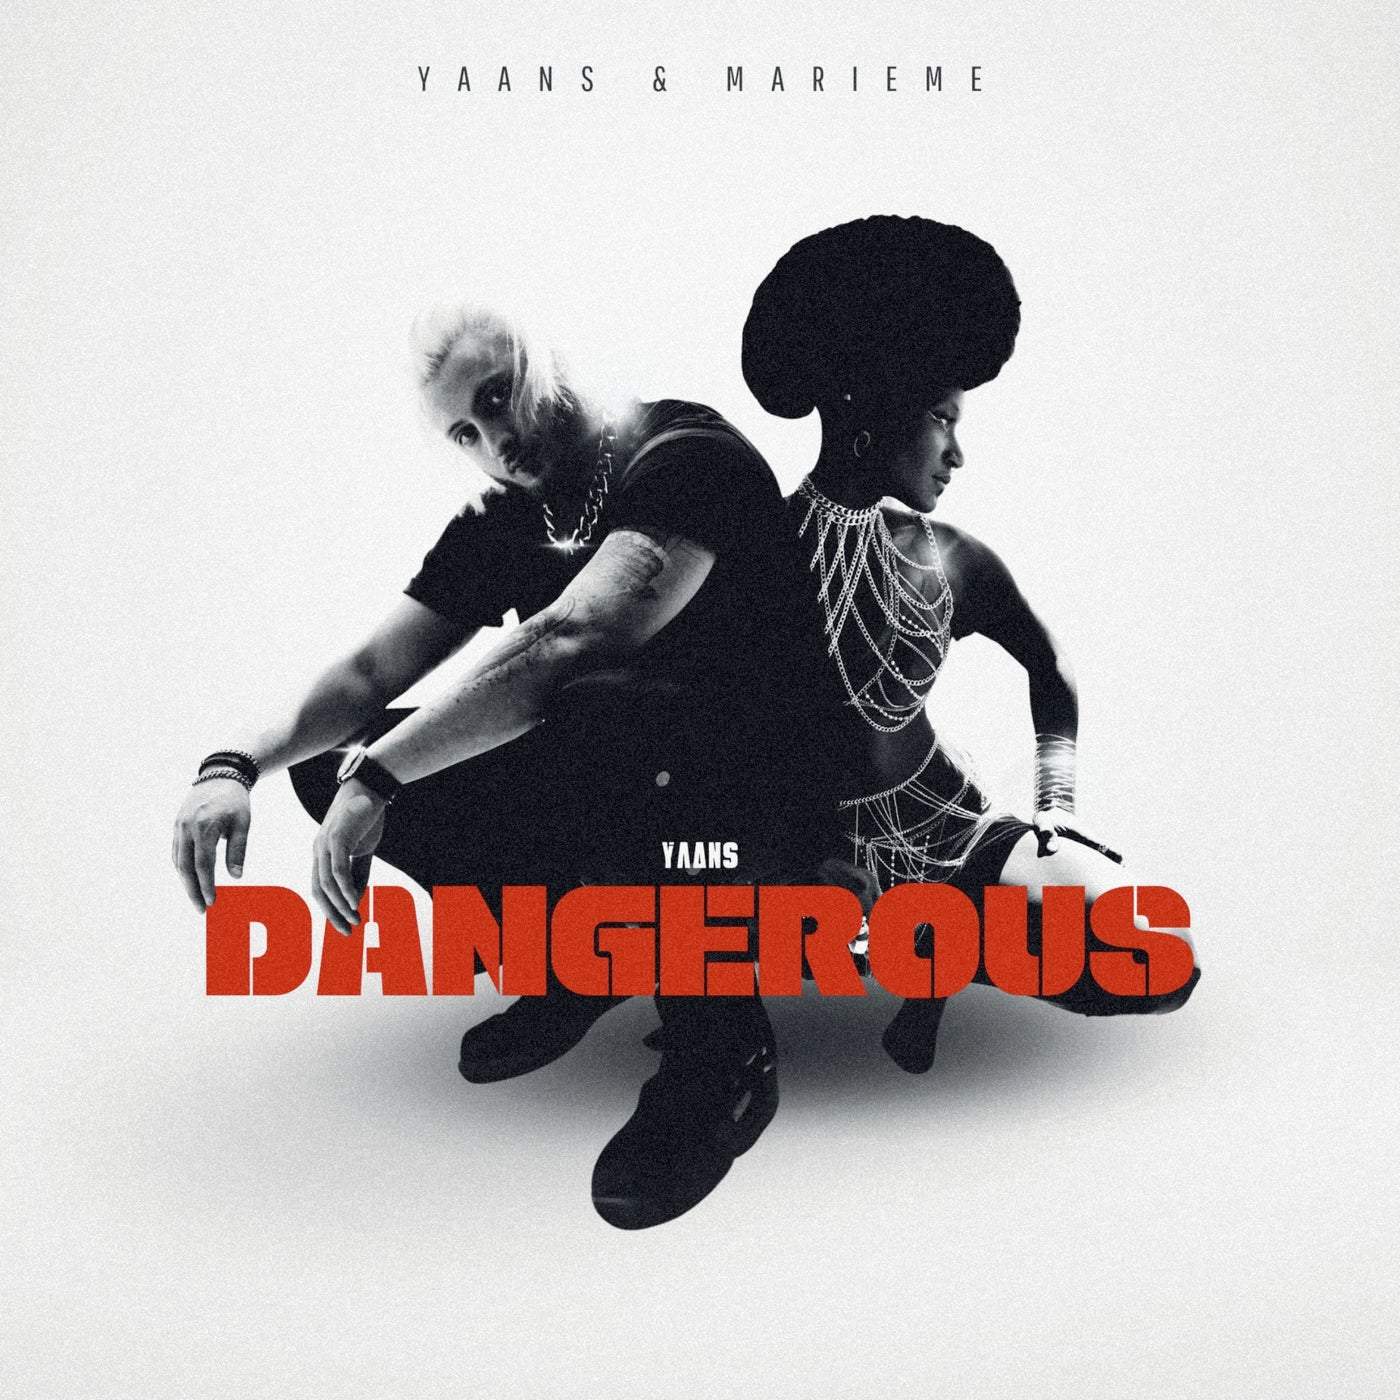 Release Cover: Marieme, Yaans - Dangerous on Electrobuzz